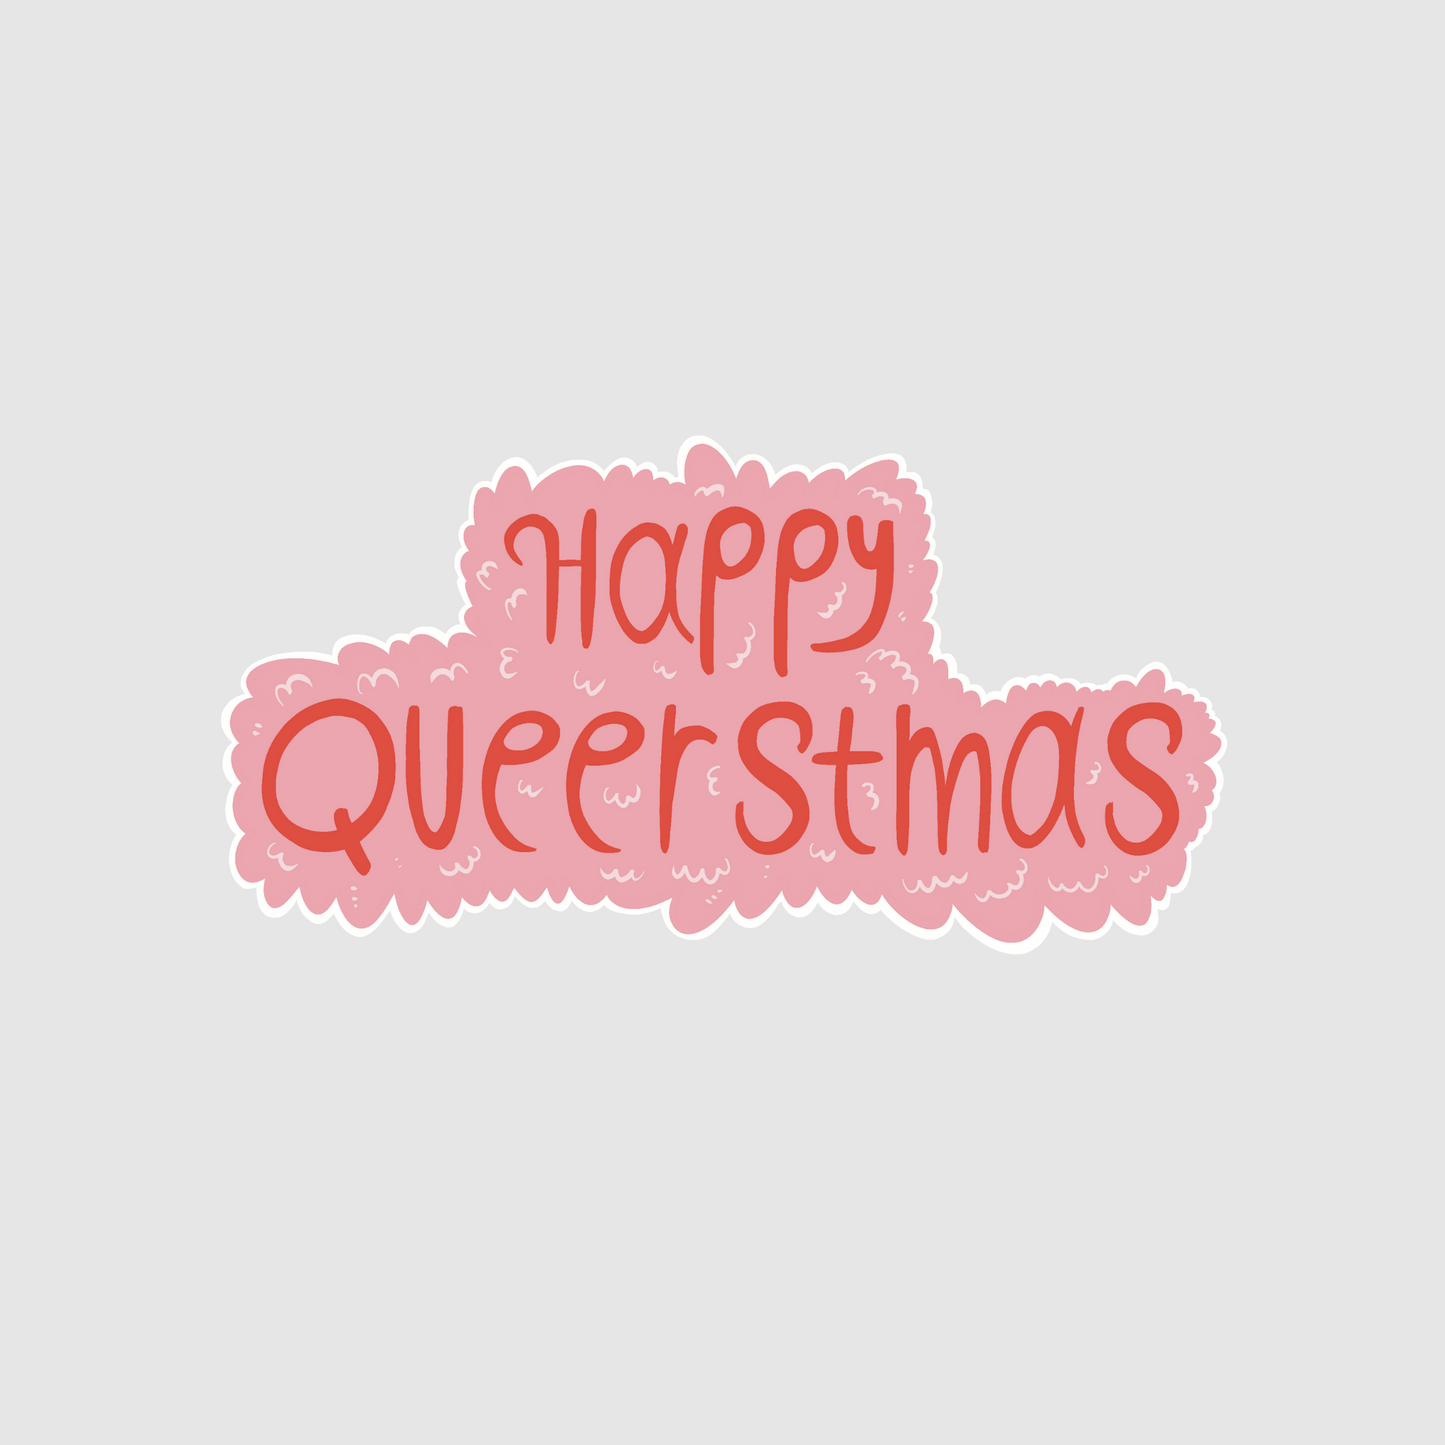 Christmas - happy queerstmas sticker